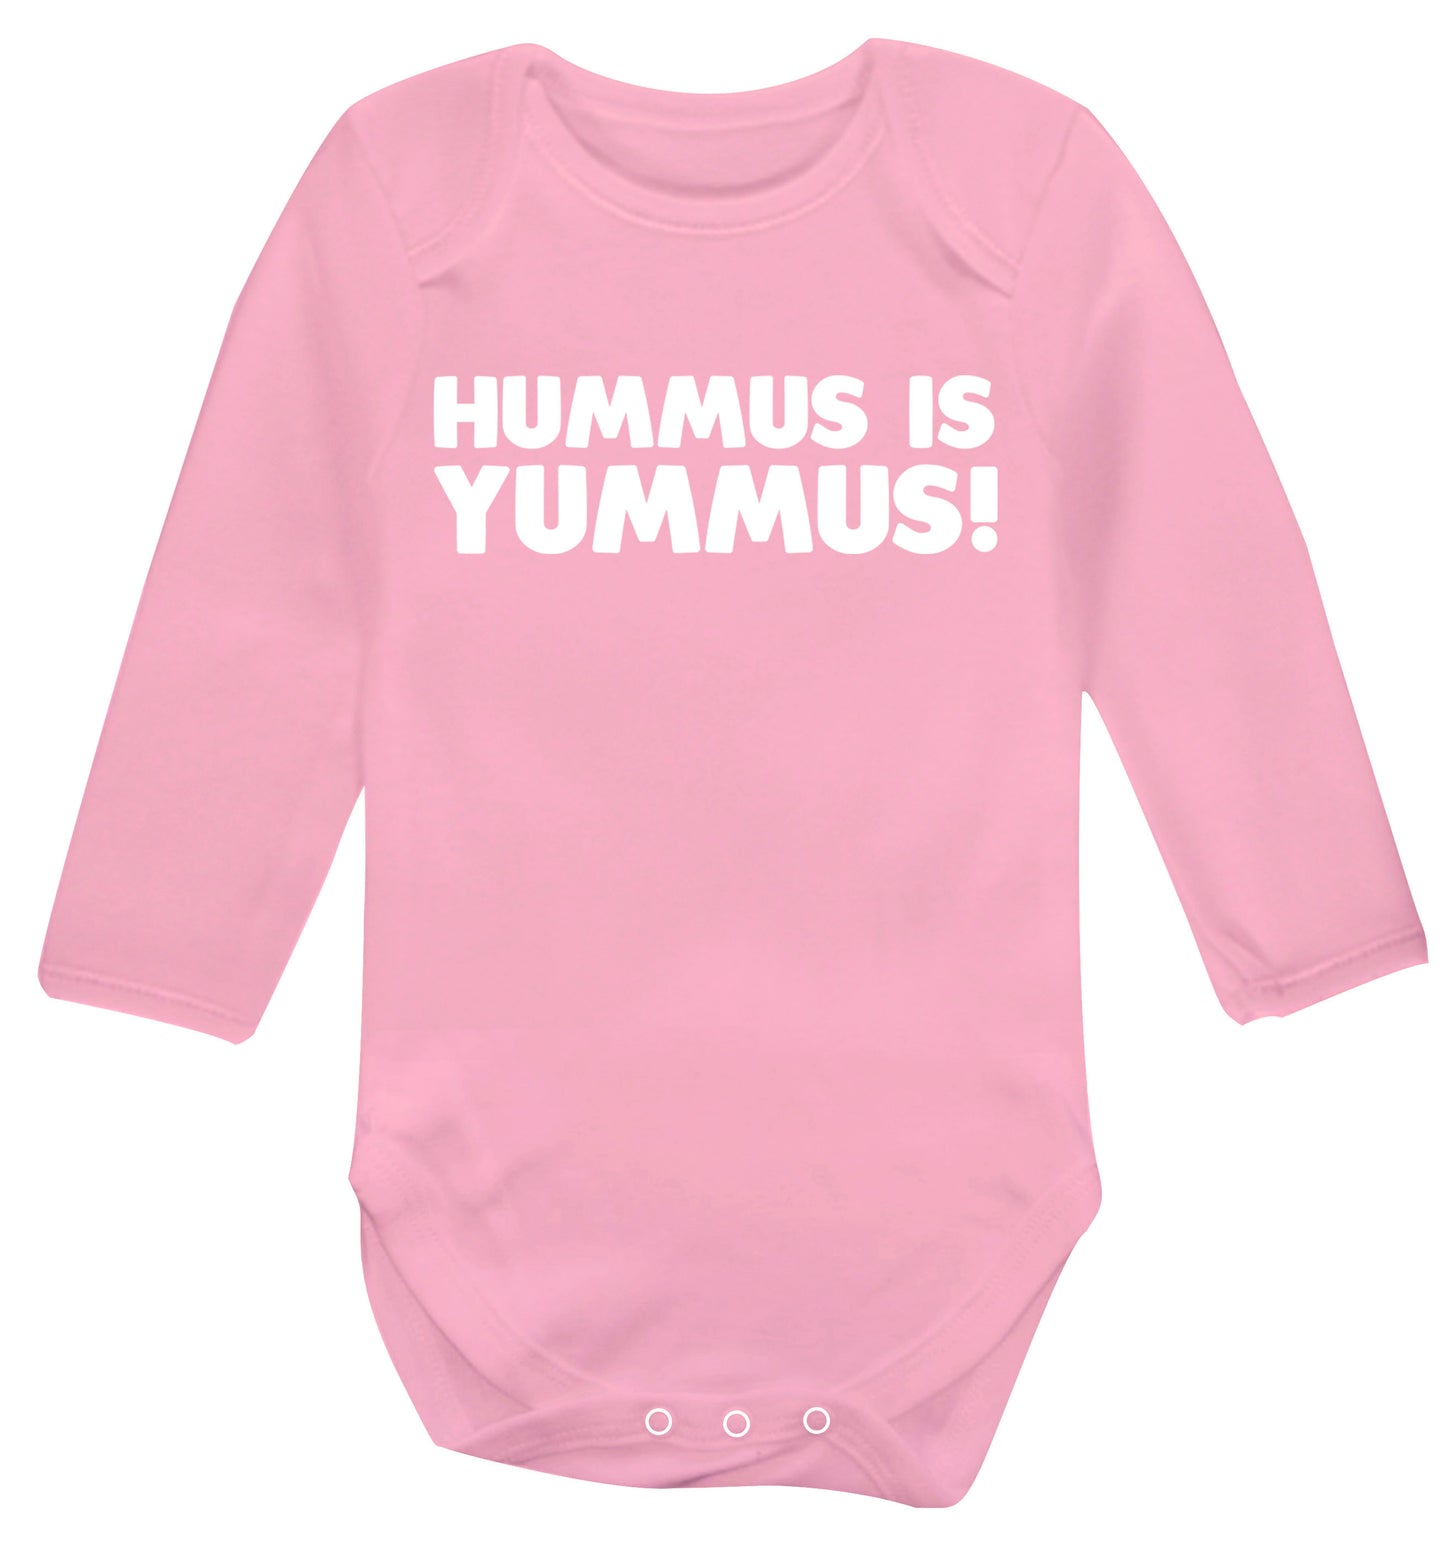 Hummus is Yummus  Baby Vest long sleeved pale pink 6-12 months